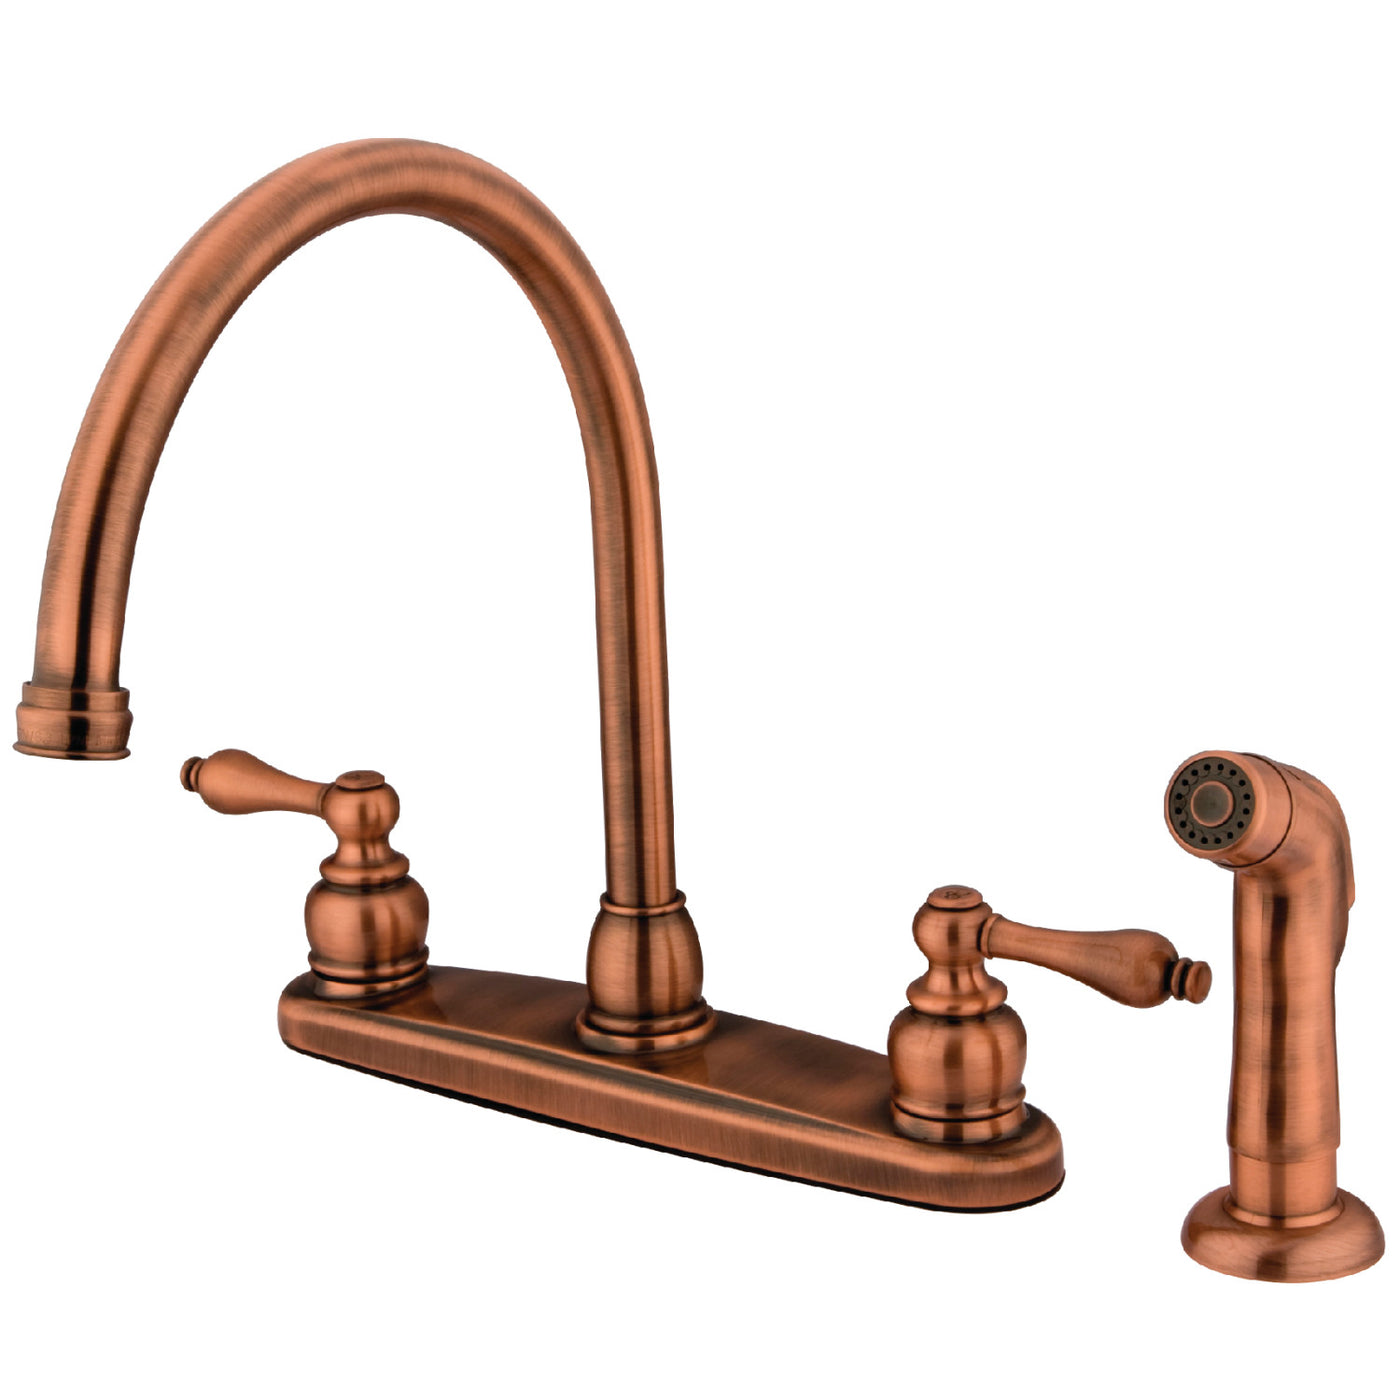 Elements of Design EB726ALSP 8-Inch Centerset Kitchen Faucet with Sprayer, Antique Copper